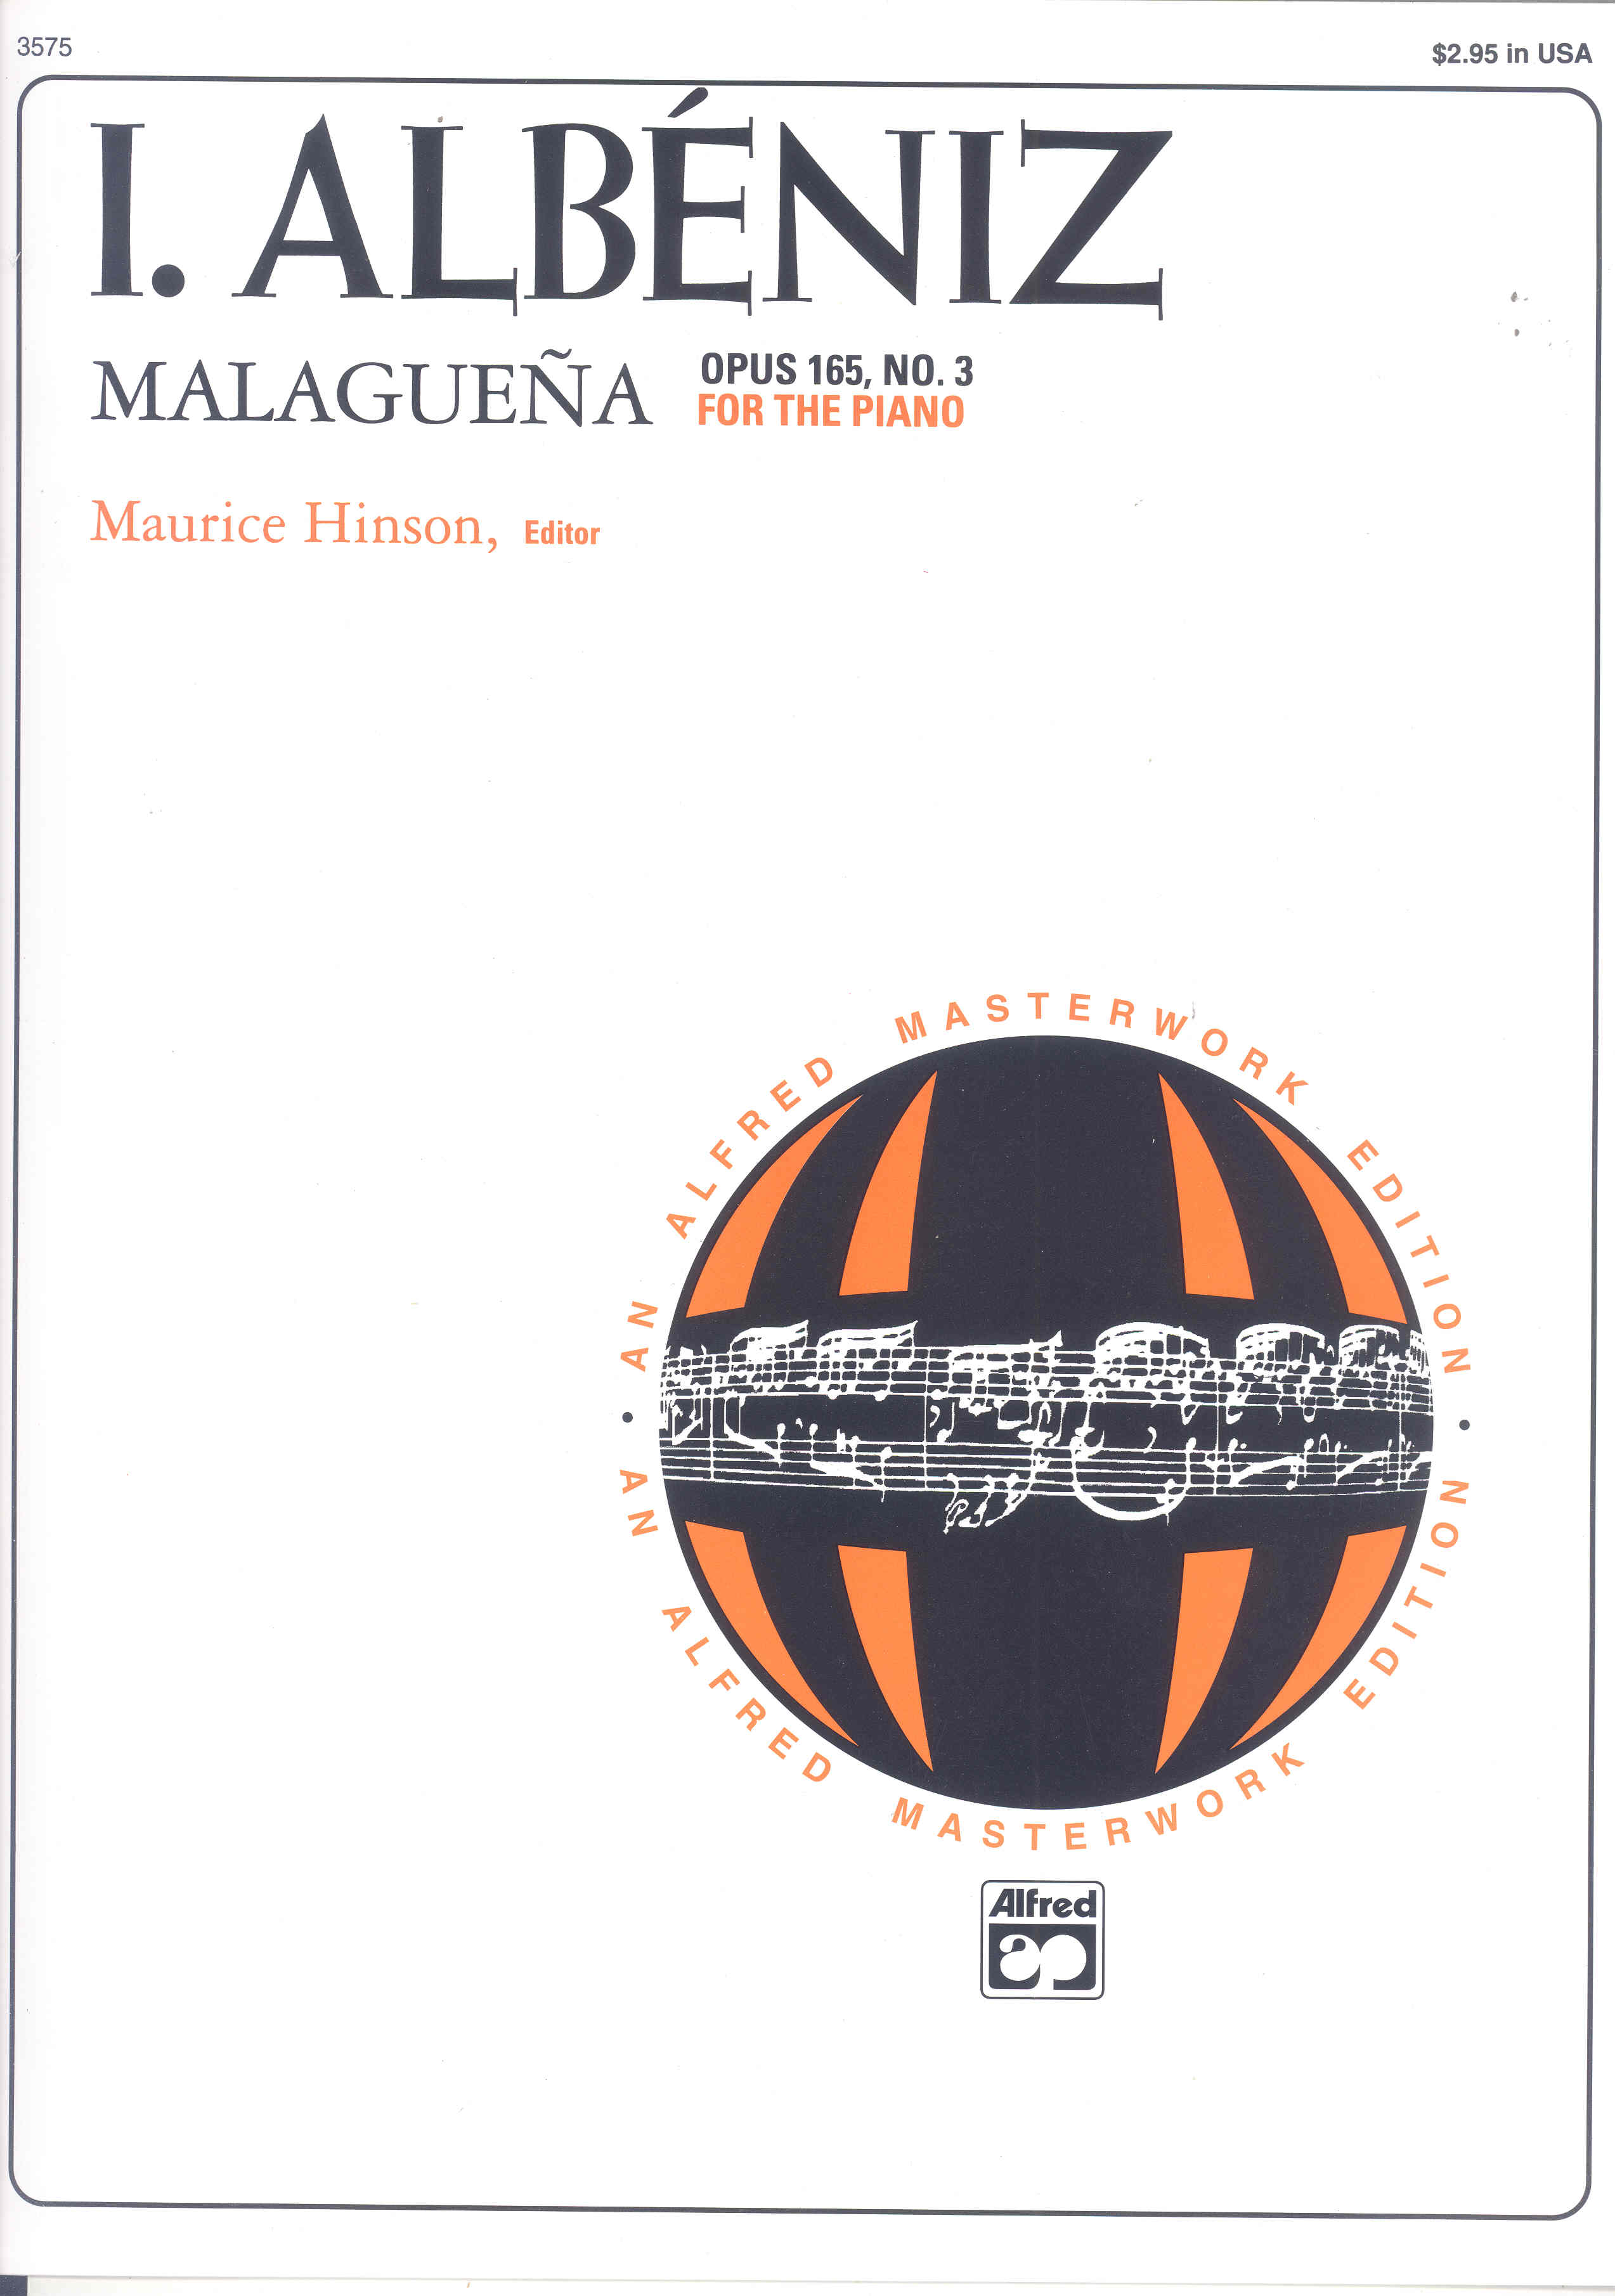 Albeniz Malaguena Op165 No 3 Piano Sheet Music Songbook